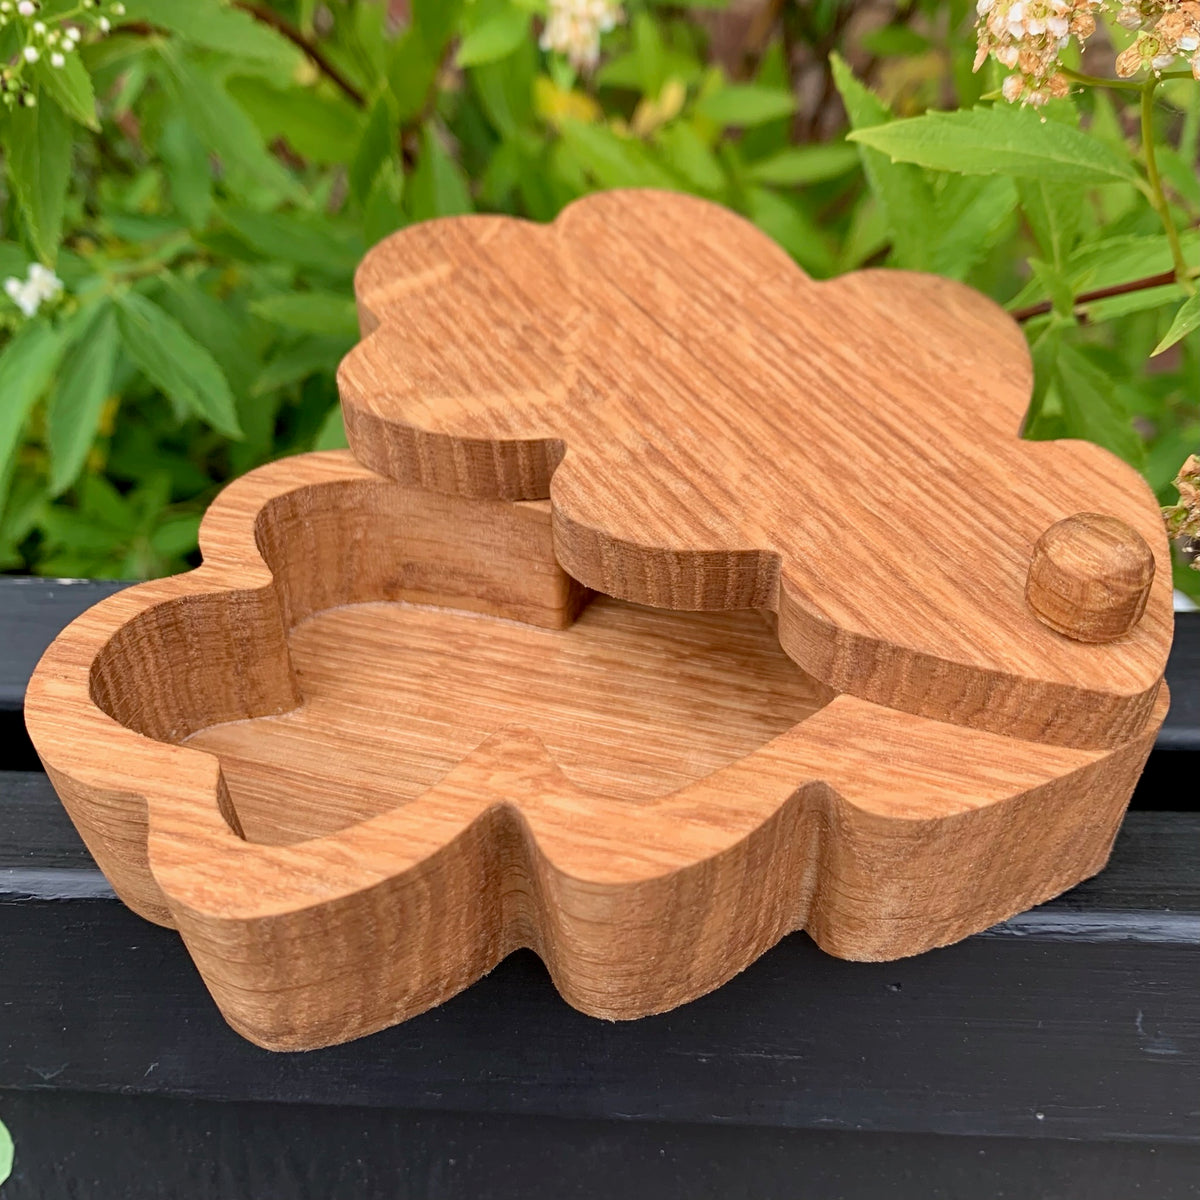 Handcrafted wooden oak leaf box